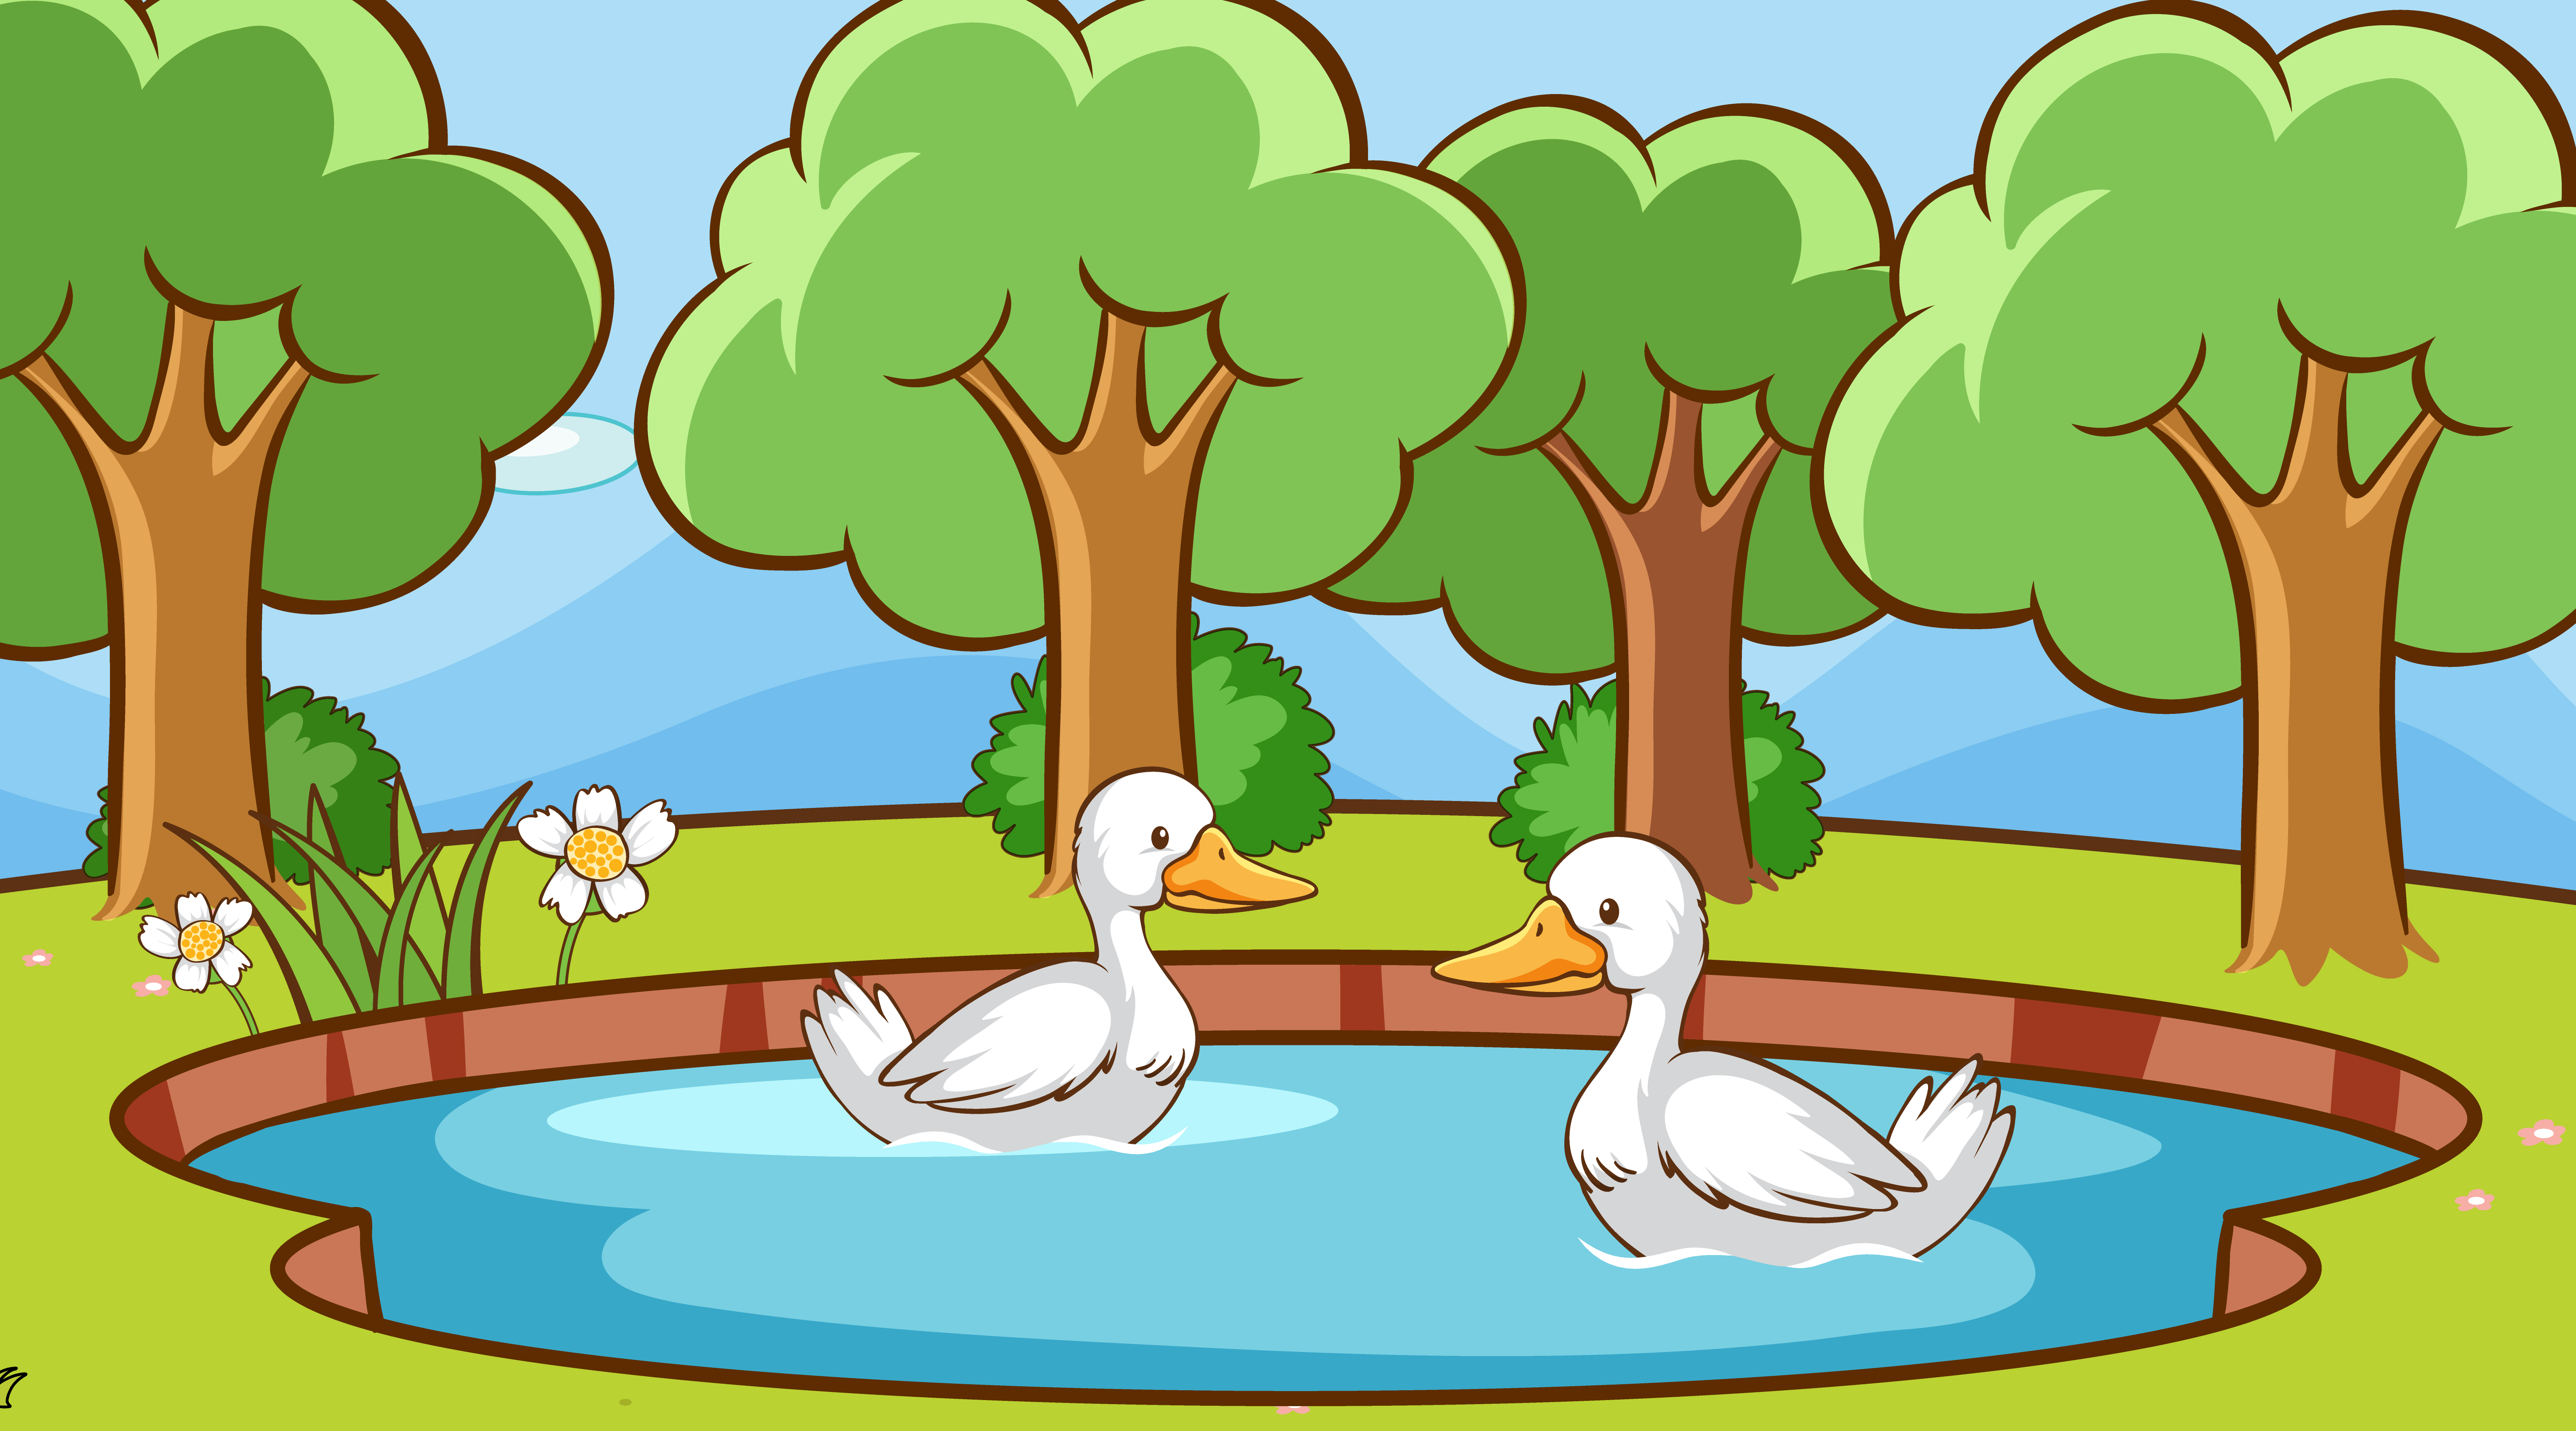 scene-with-ducks-in-the-pond-1235275-vector-art-at-vecteezy